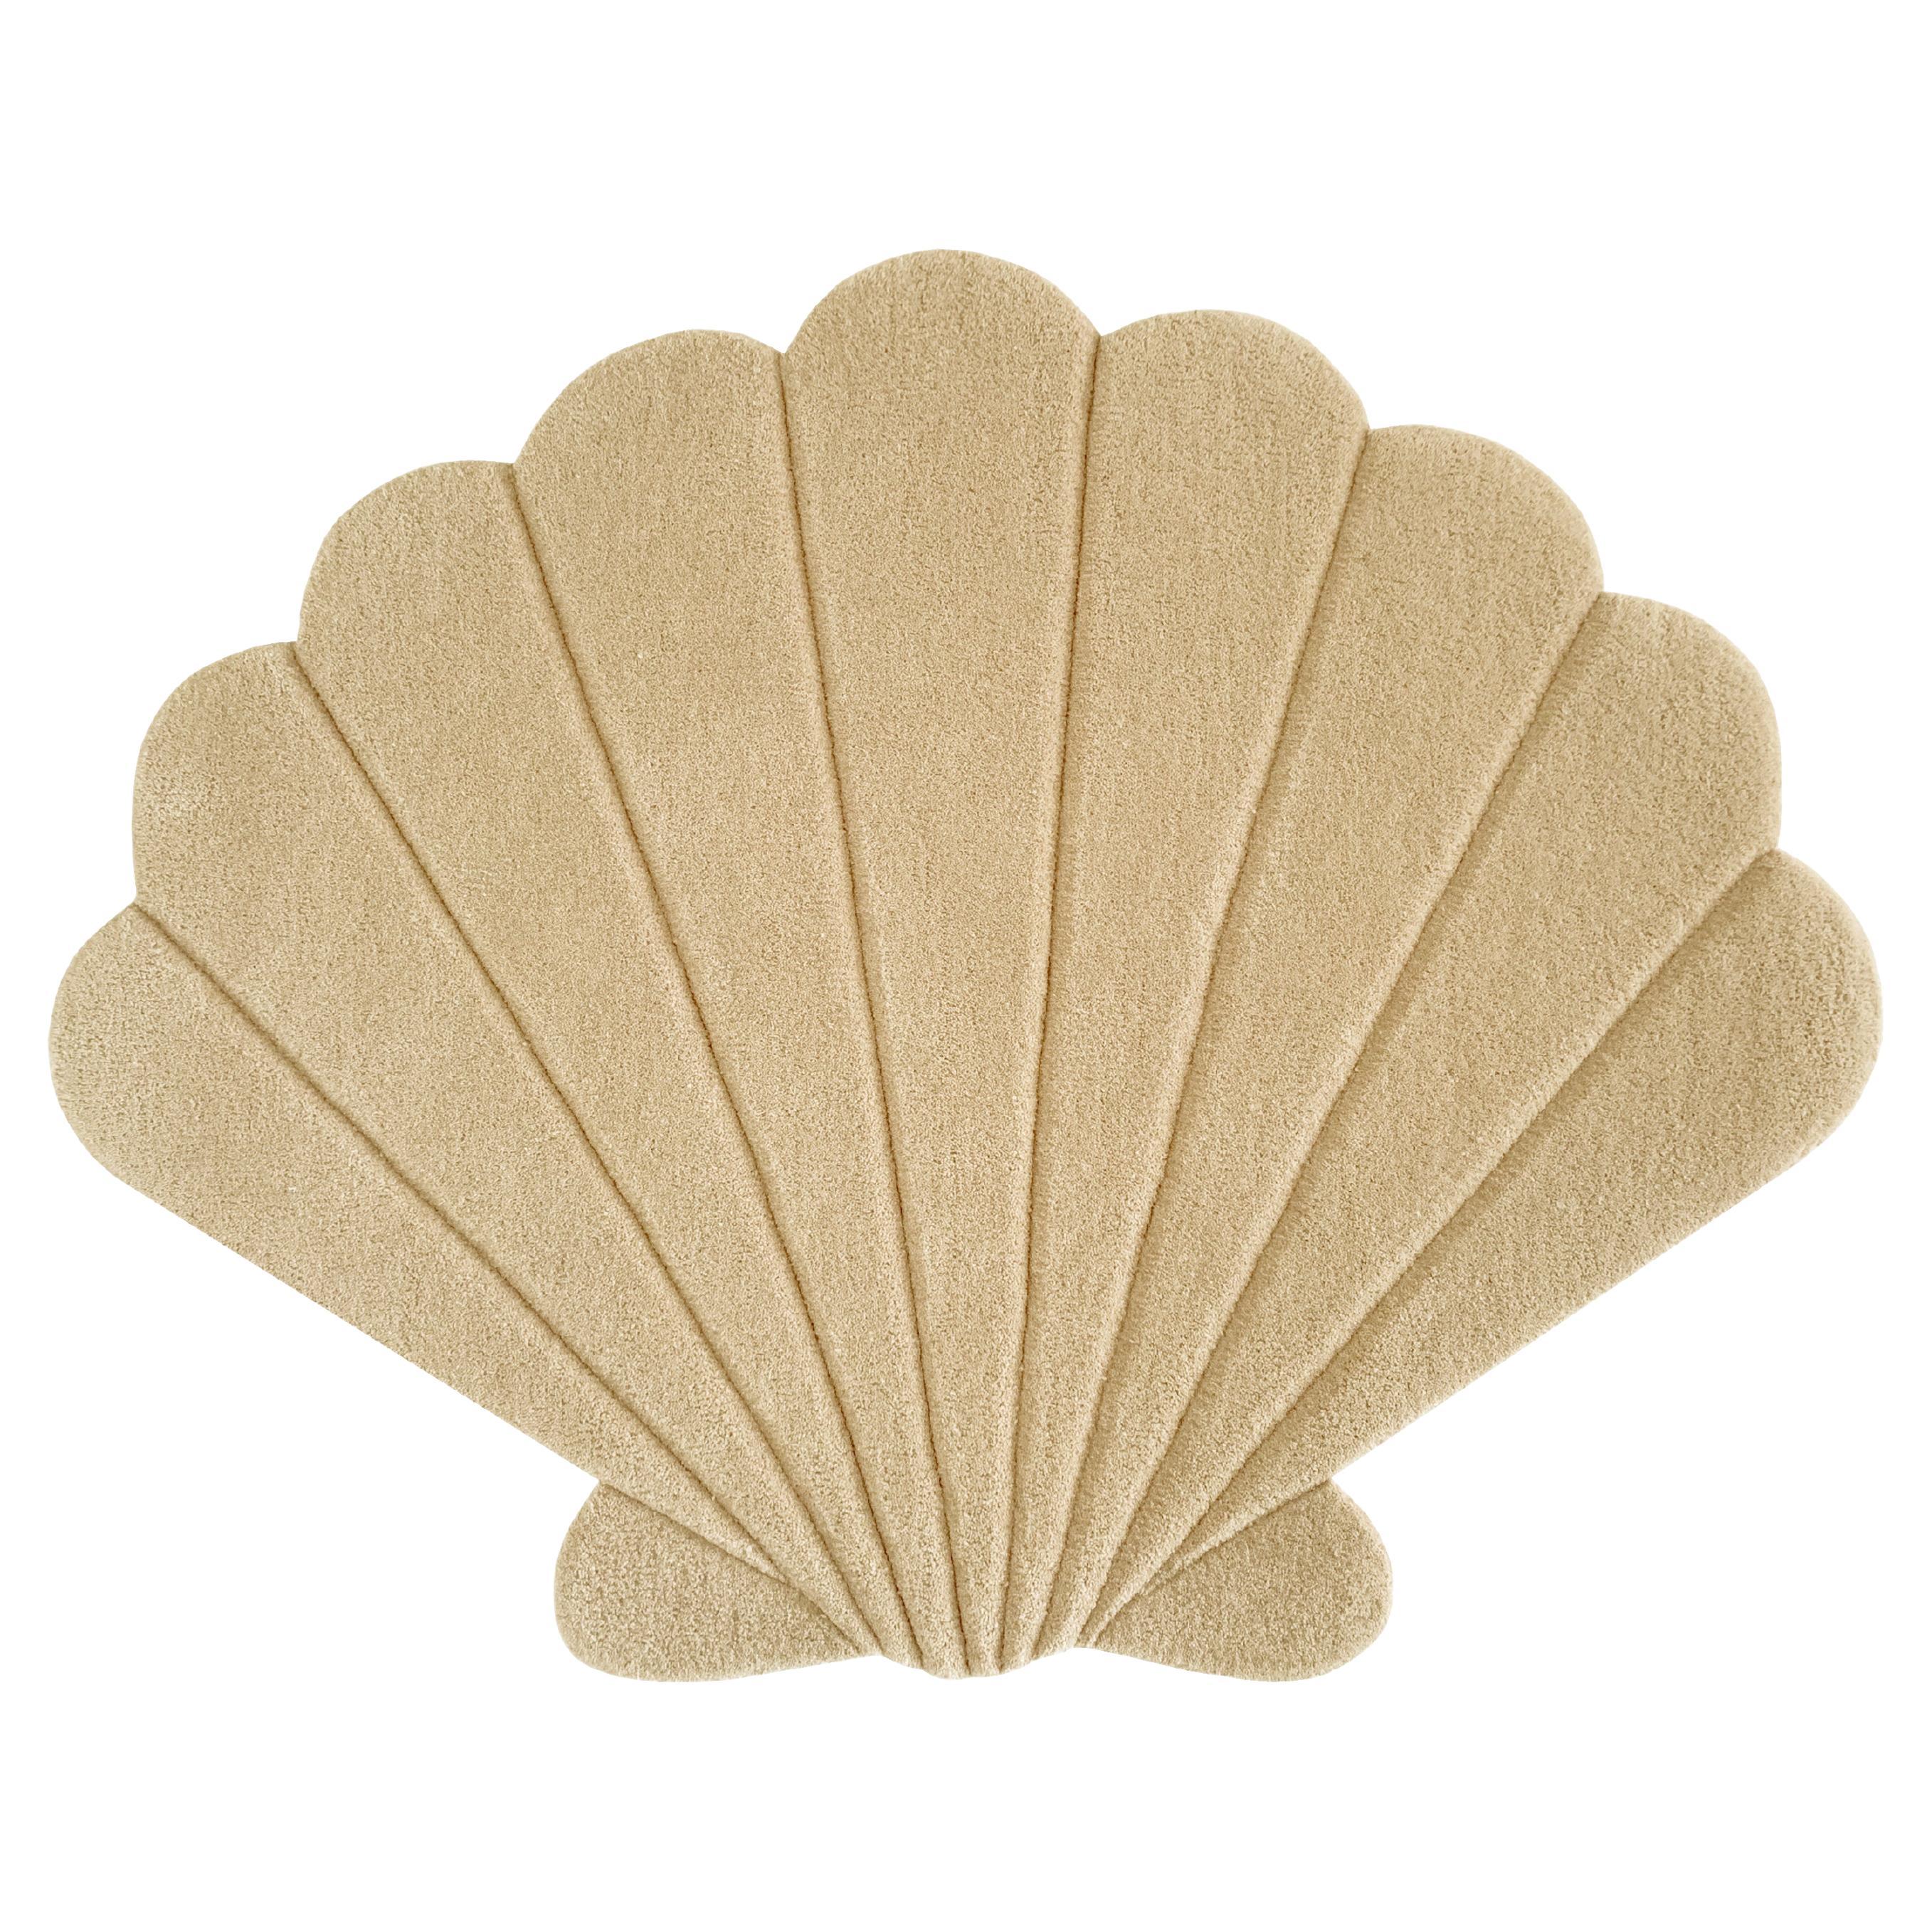 Shell Rug Sand, 3D Hand-tufted